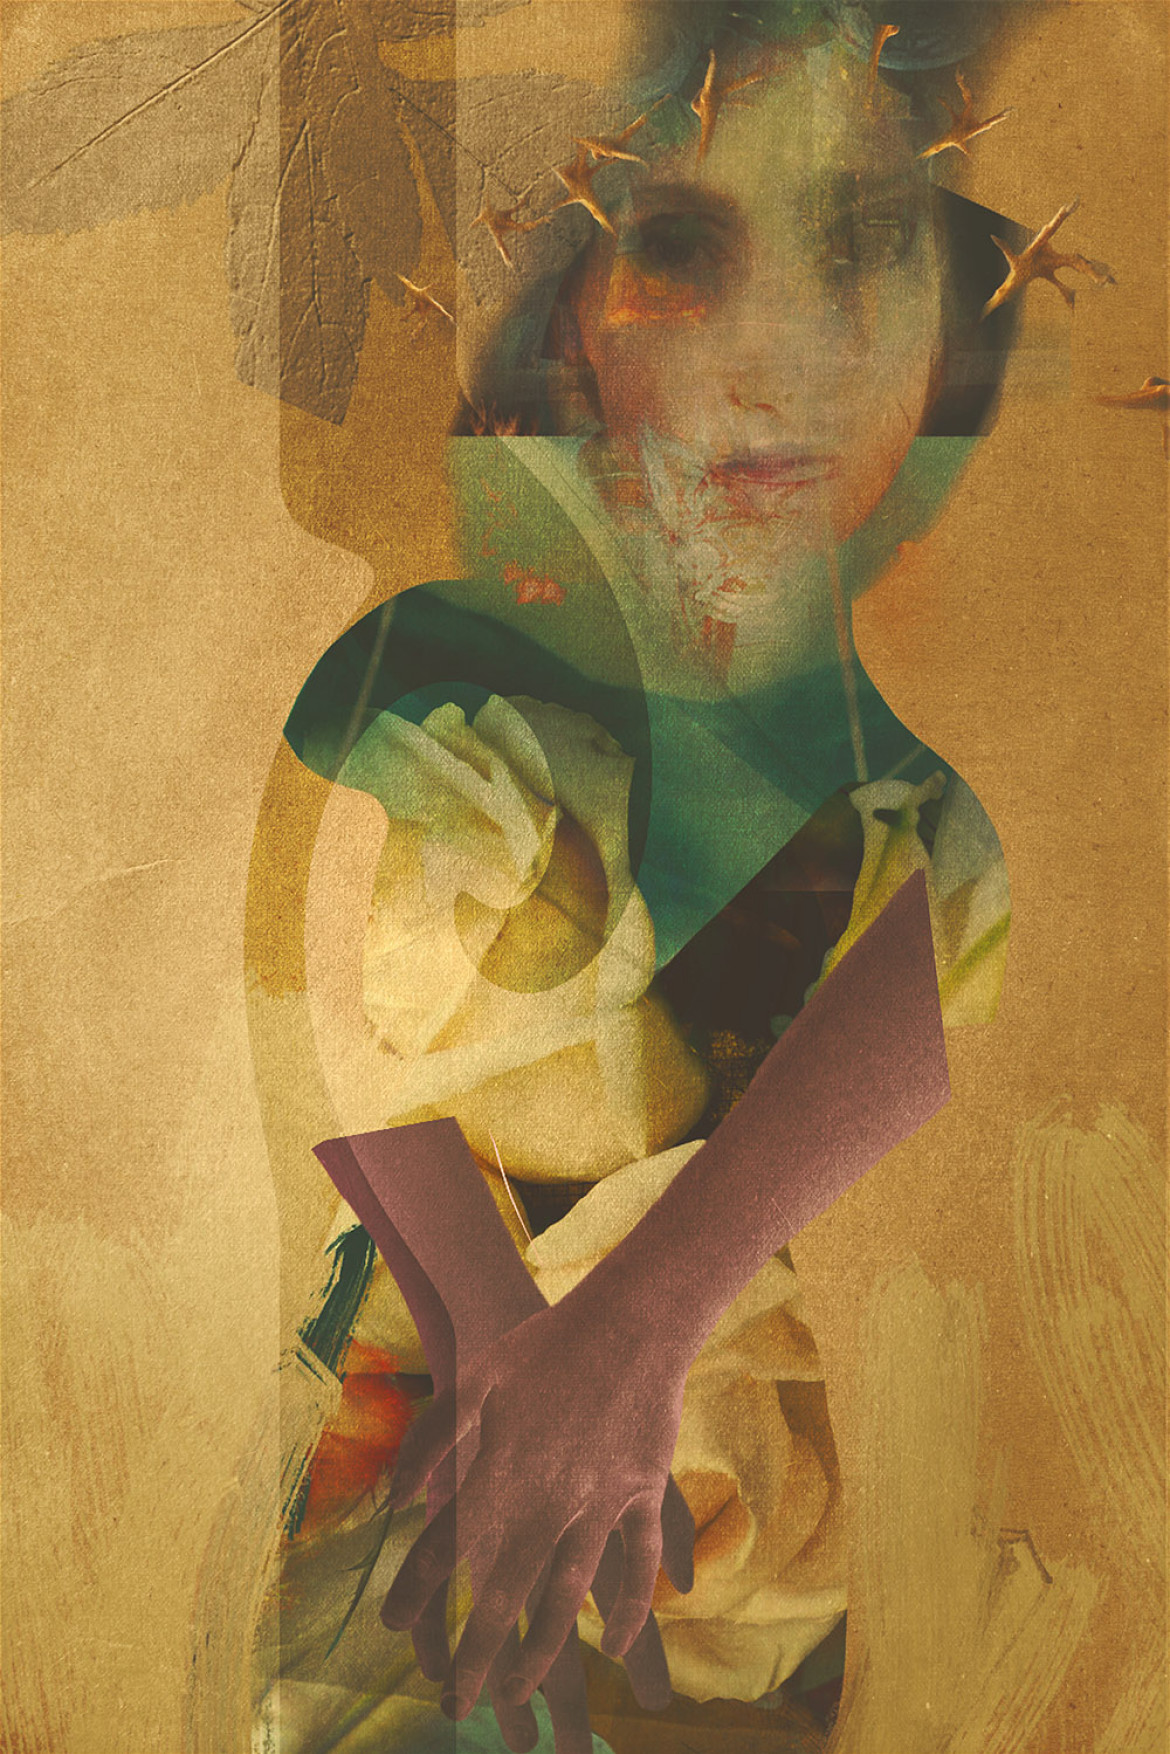 1. miejsce w kategorii "Visual FX", fot. Bobbi McMurry